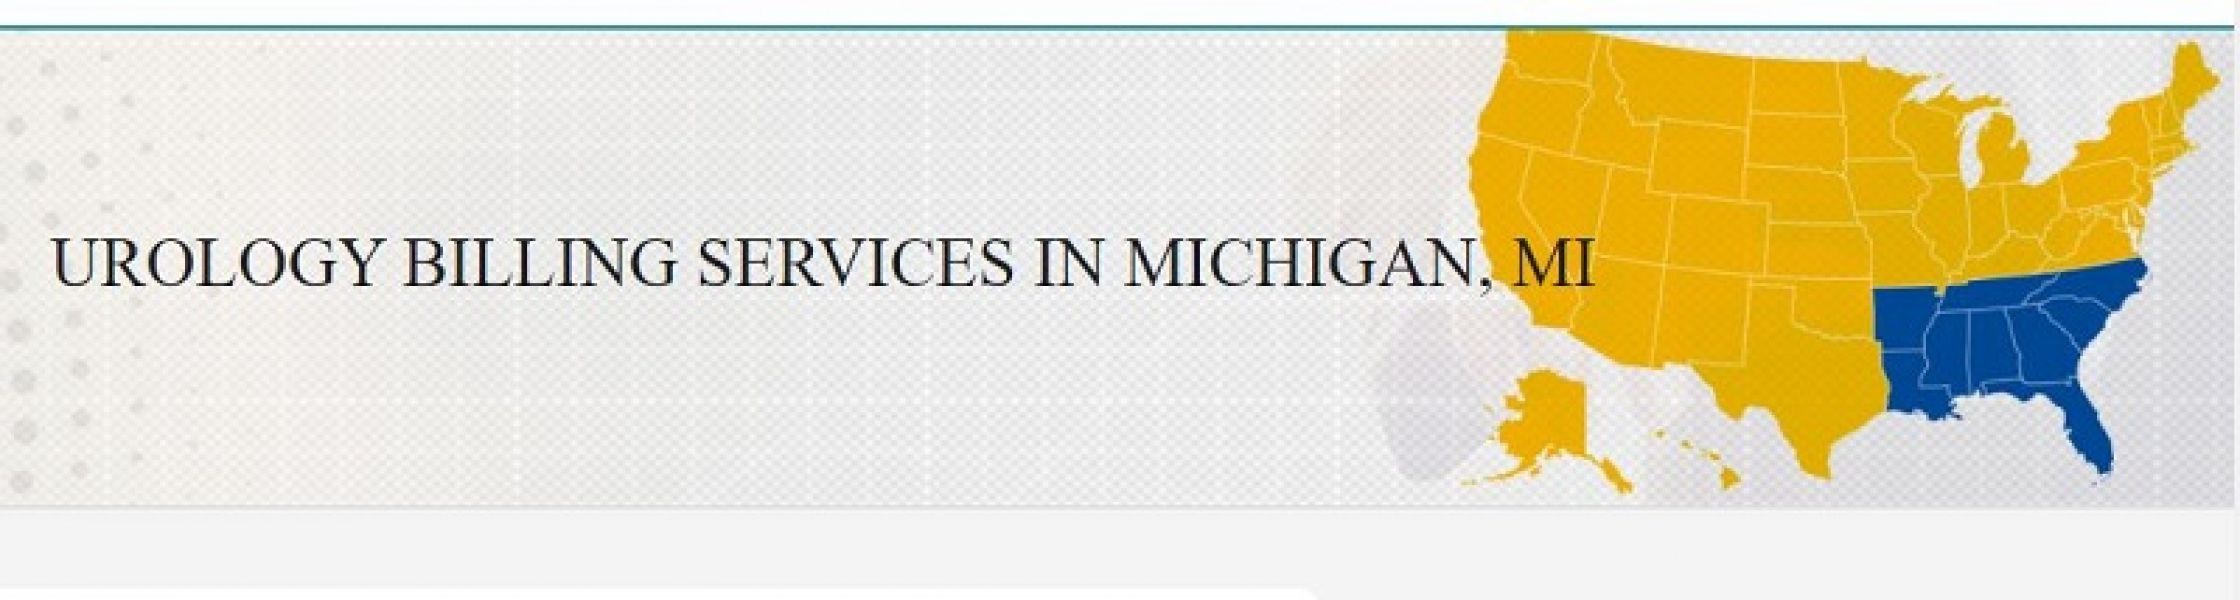 Urology Billing Services for Michigan, MI